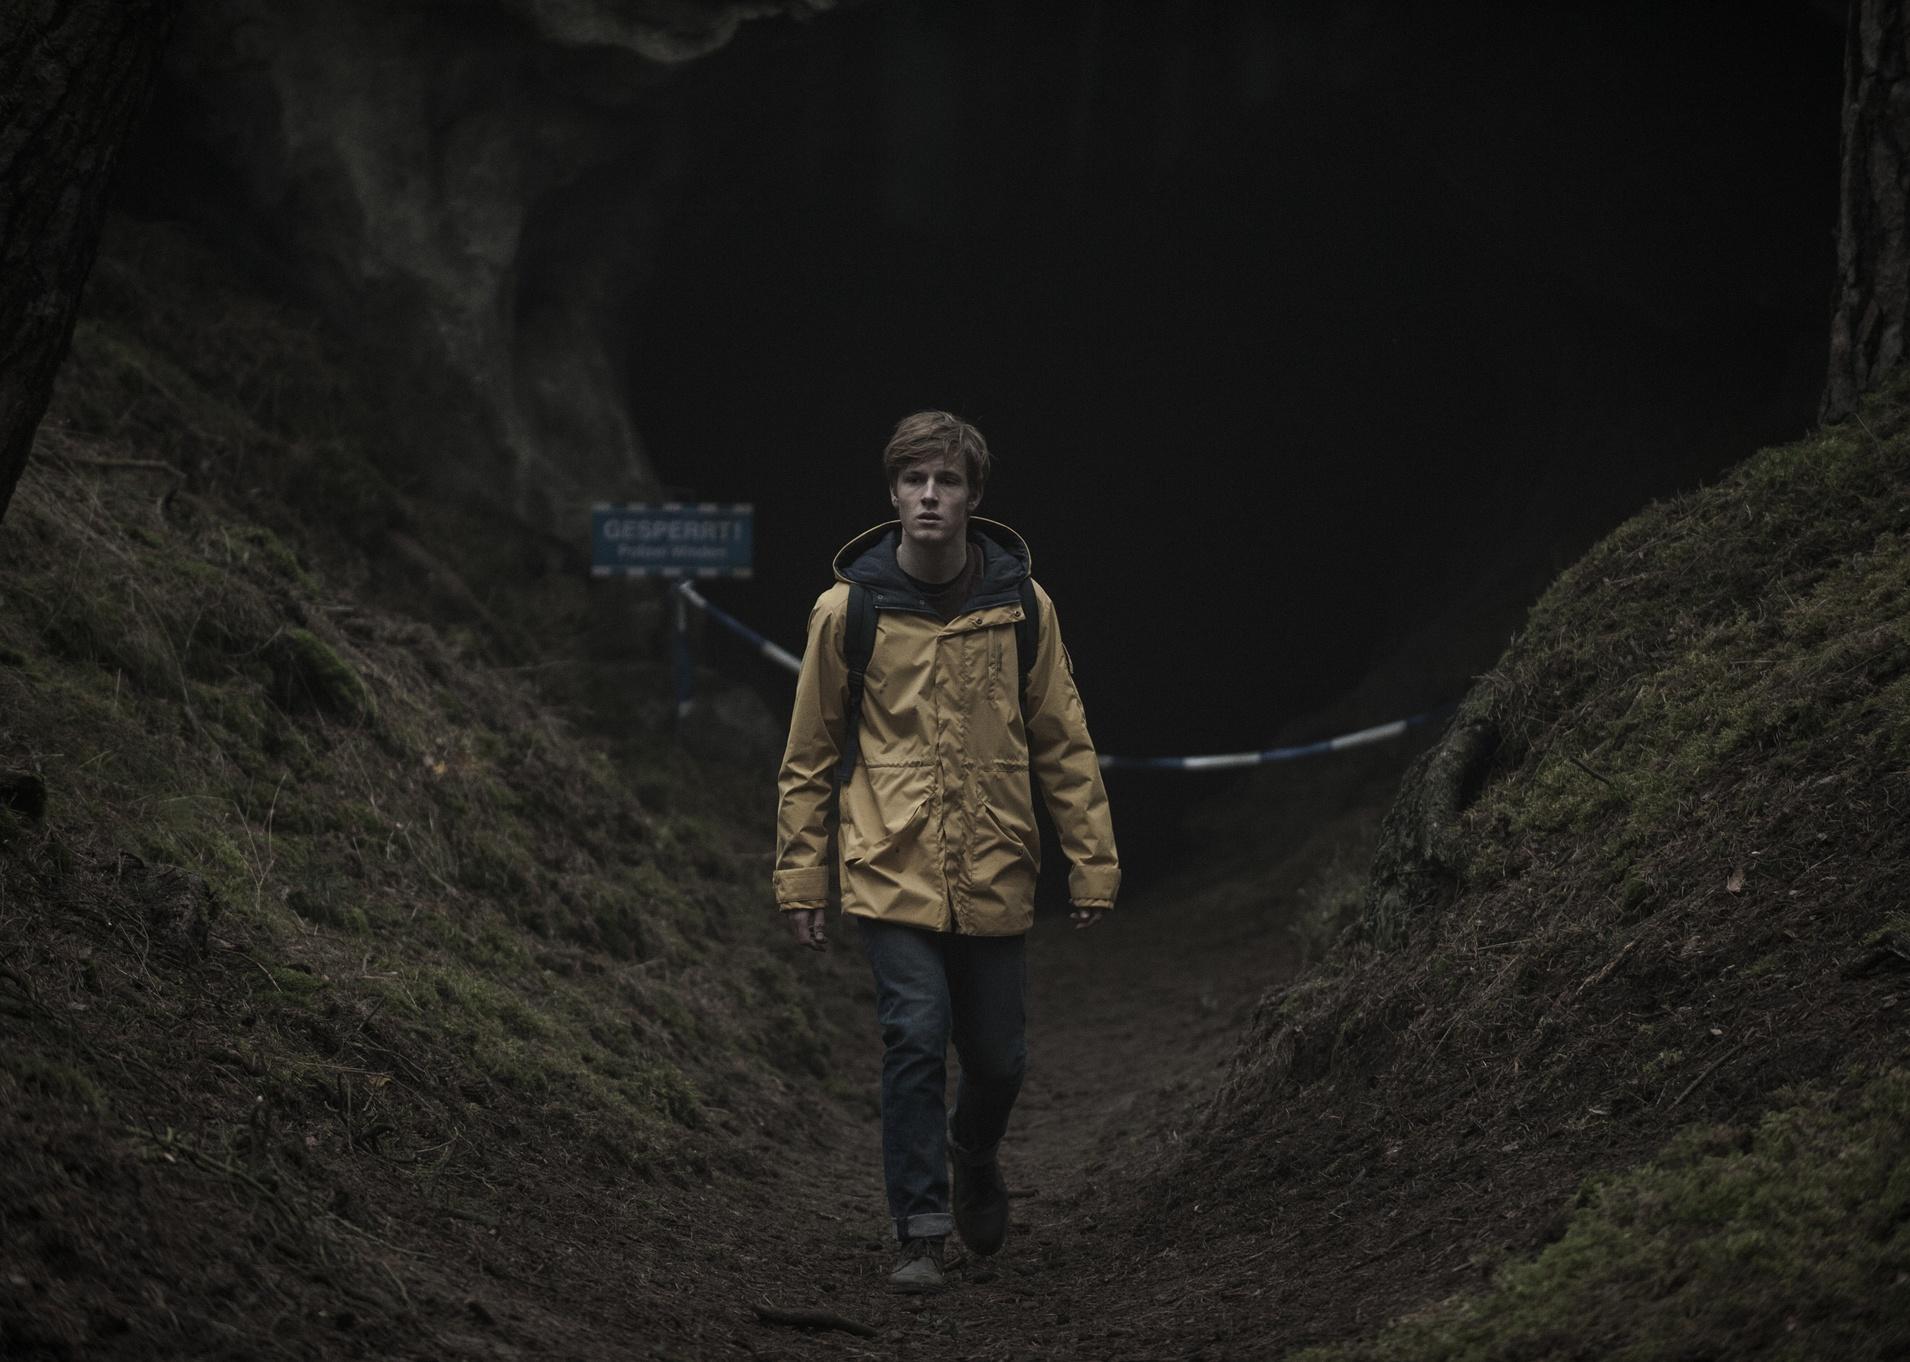 A boy in a yellow raincoat walking near a dark cave.